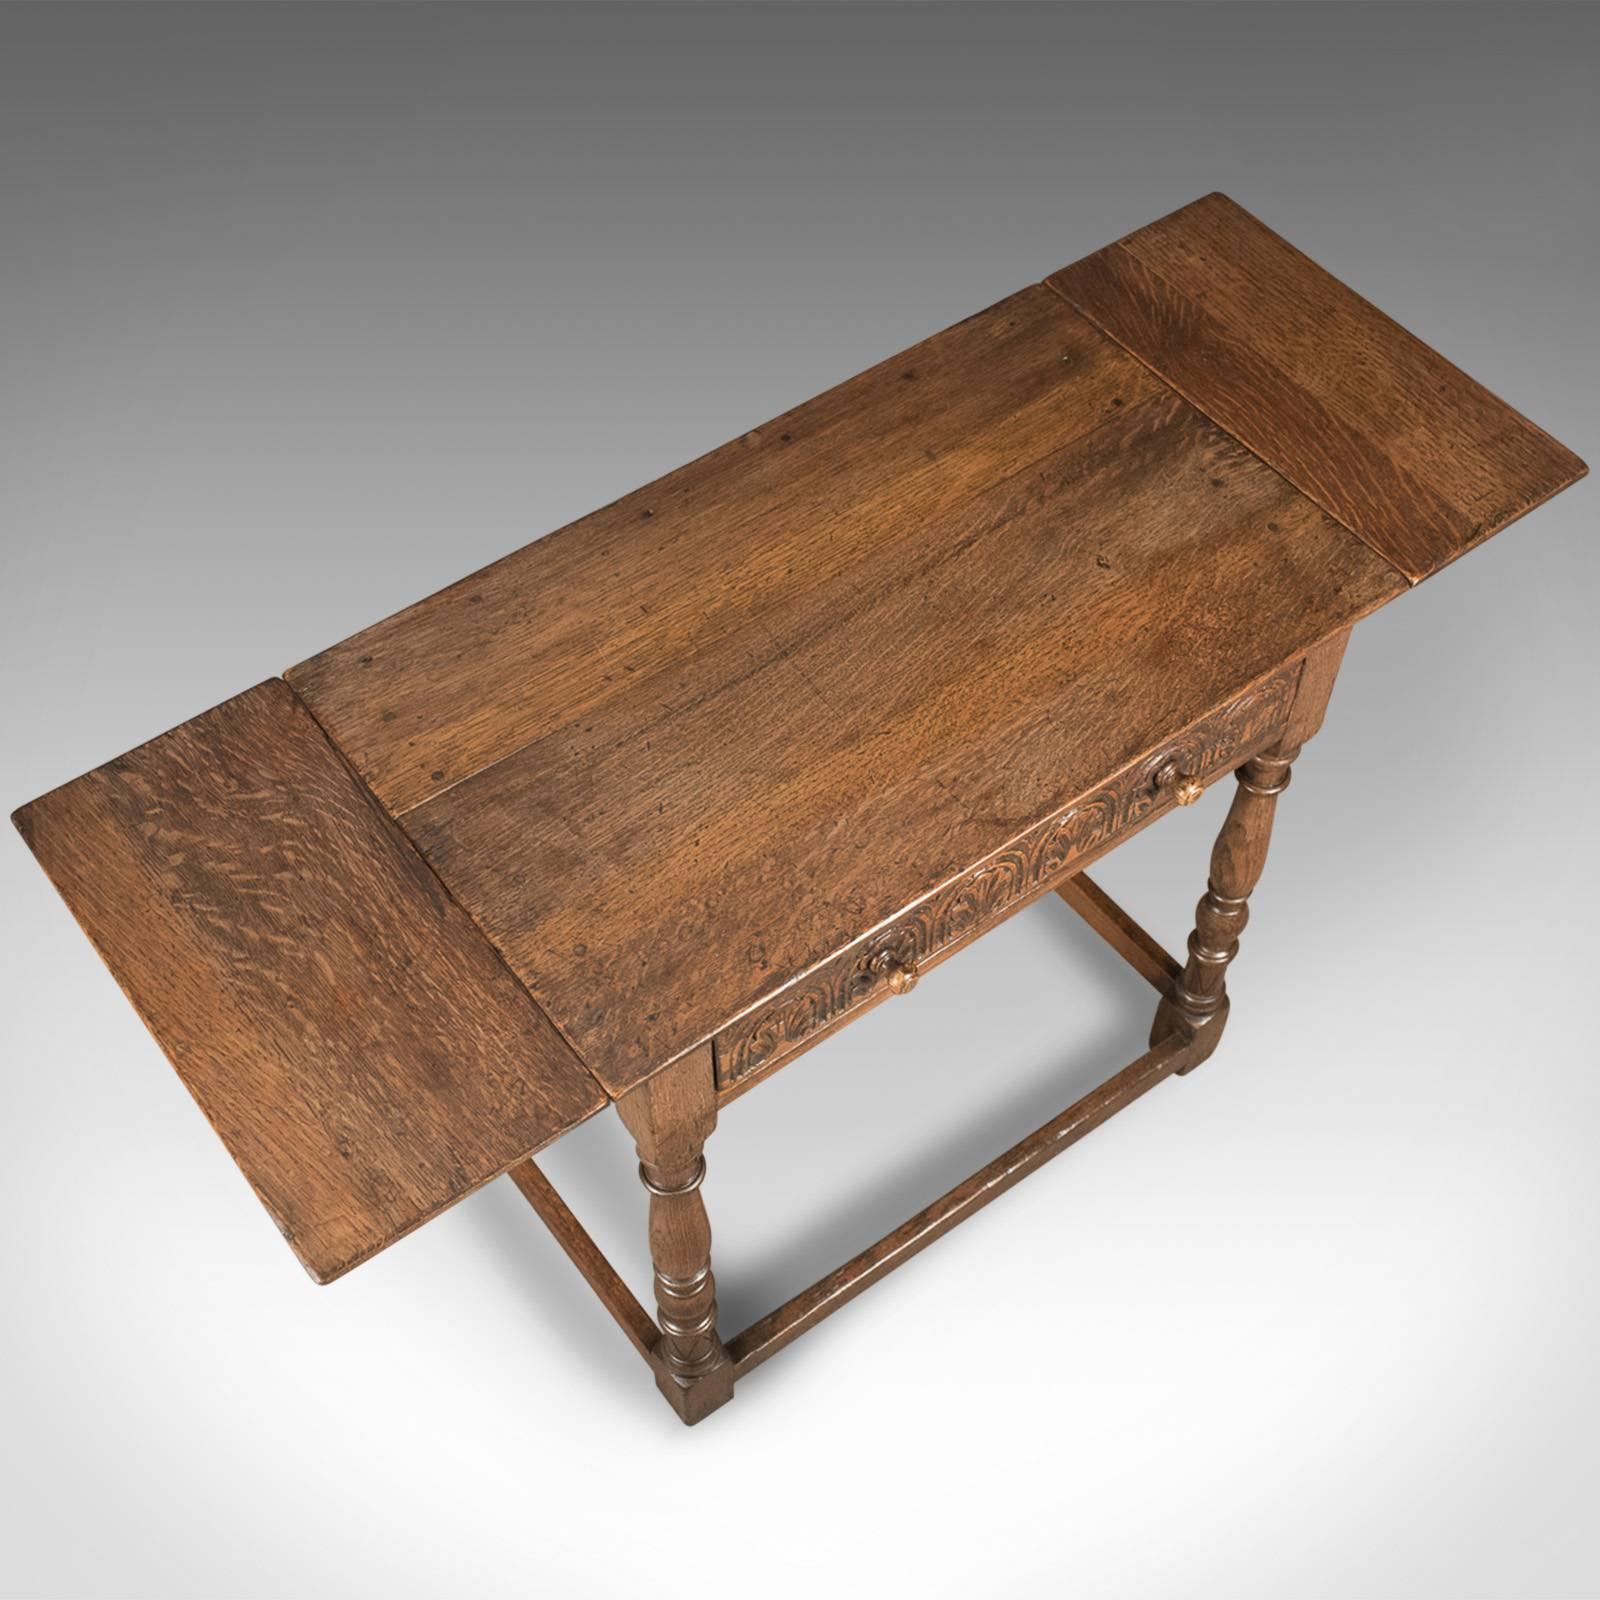 19th Century Antique Drop Flap Side Table, Victorian 17th Century Revival, English Oak